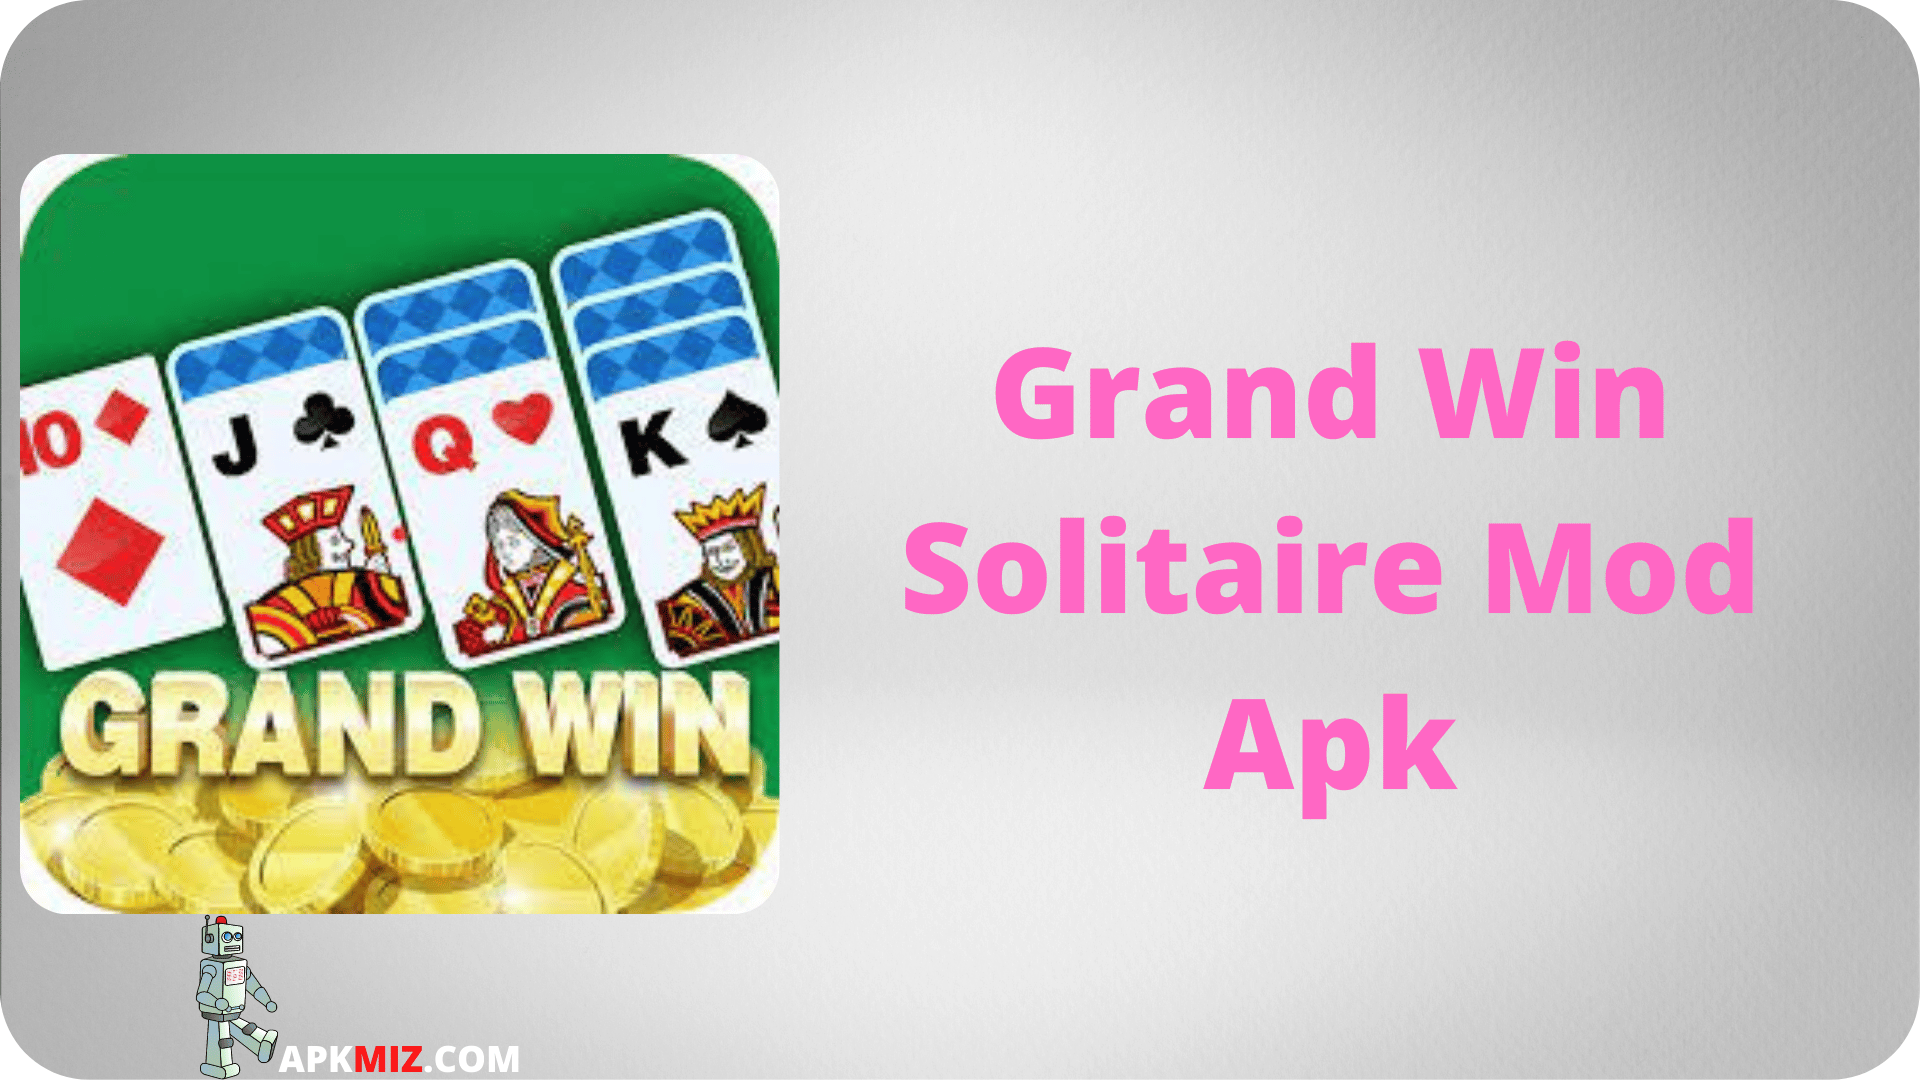 Grand Win Solitaire Mod Apk